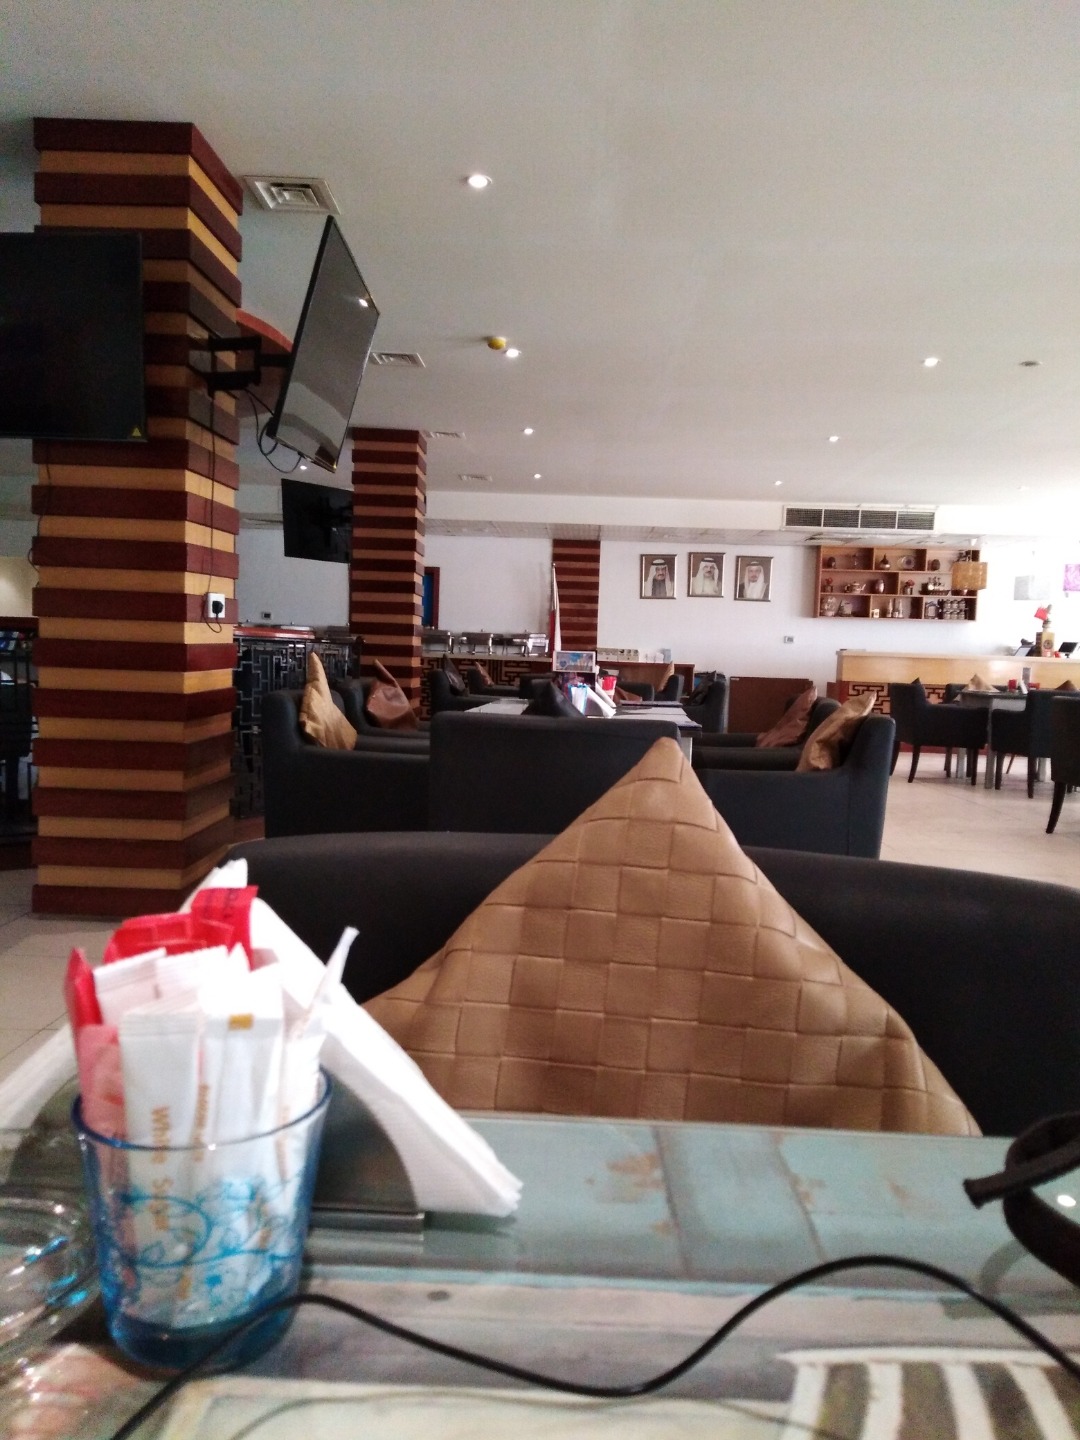 مكان جميل وراقي والاجمل بأن خدماتهم وتعامل الموظفين رائع @ LaShish Restaurant & Cafe - Bahrain